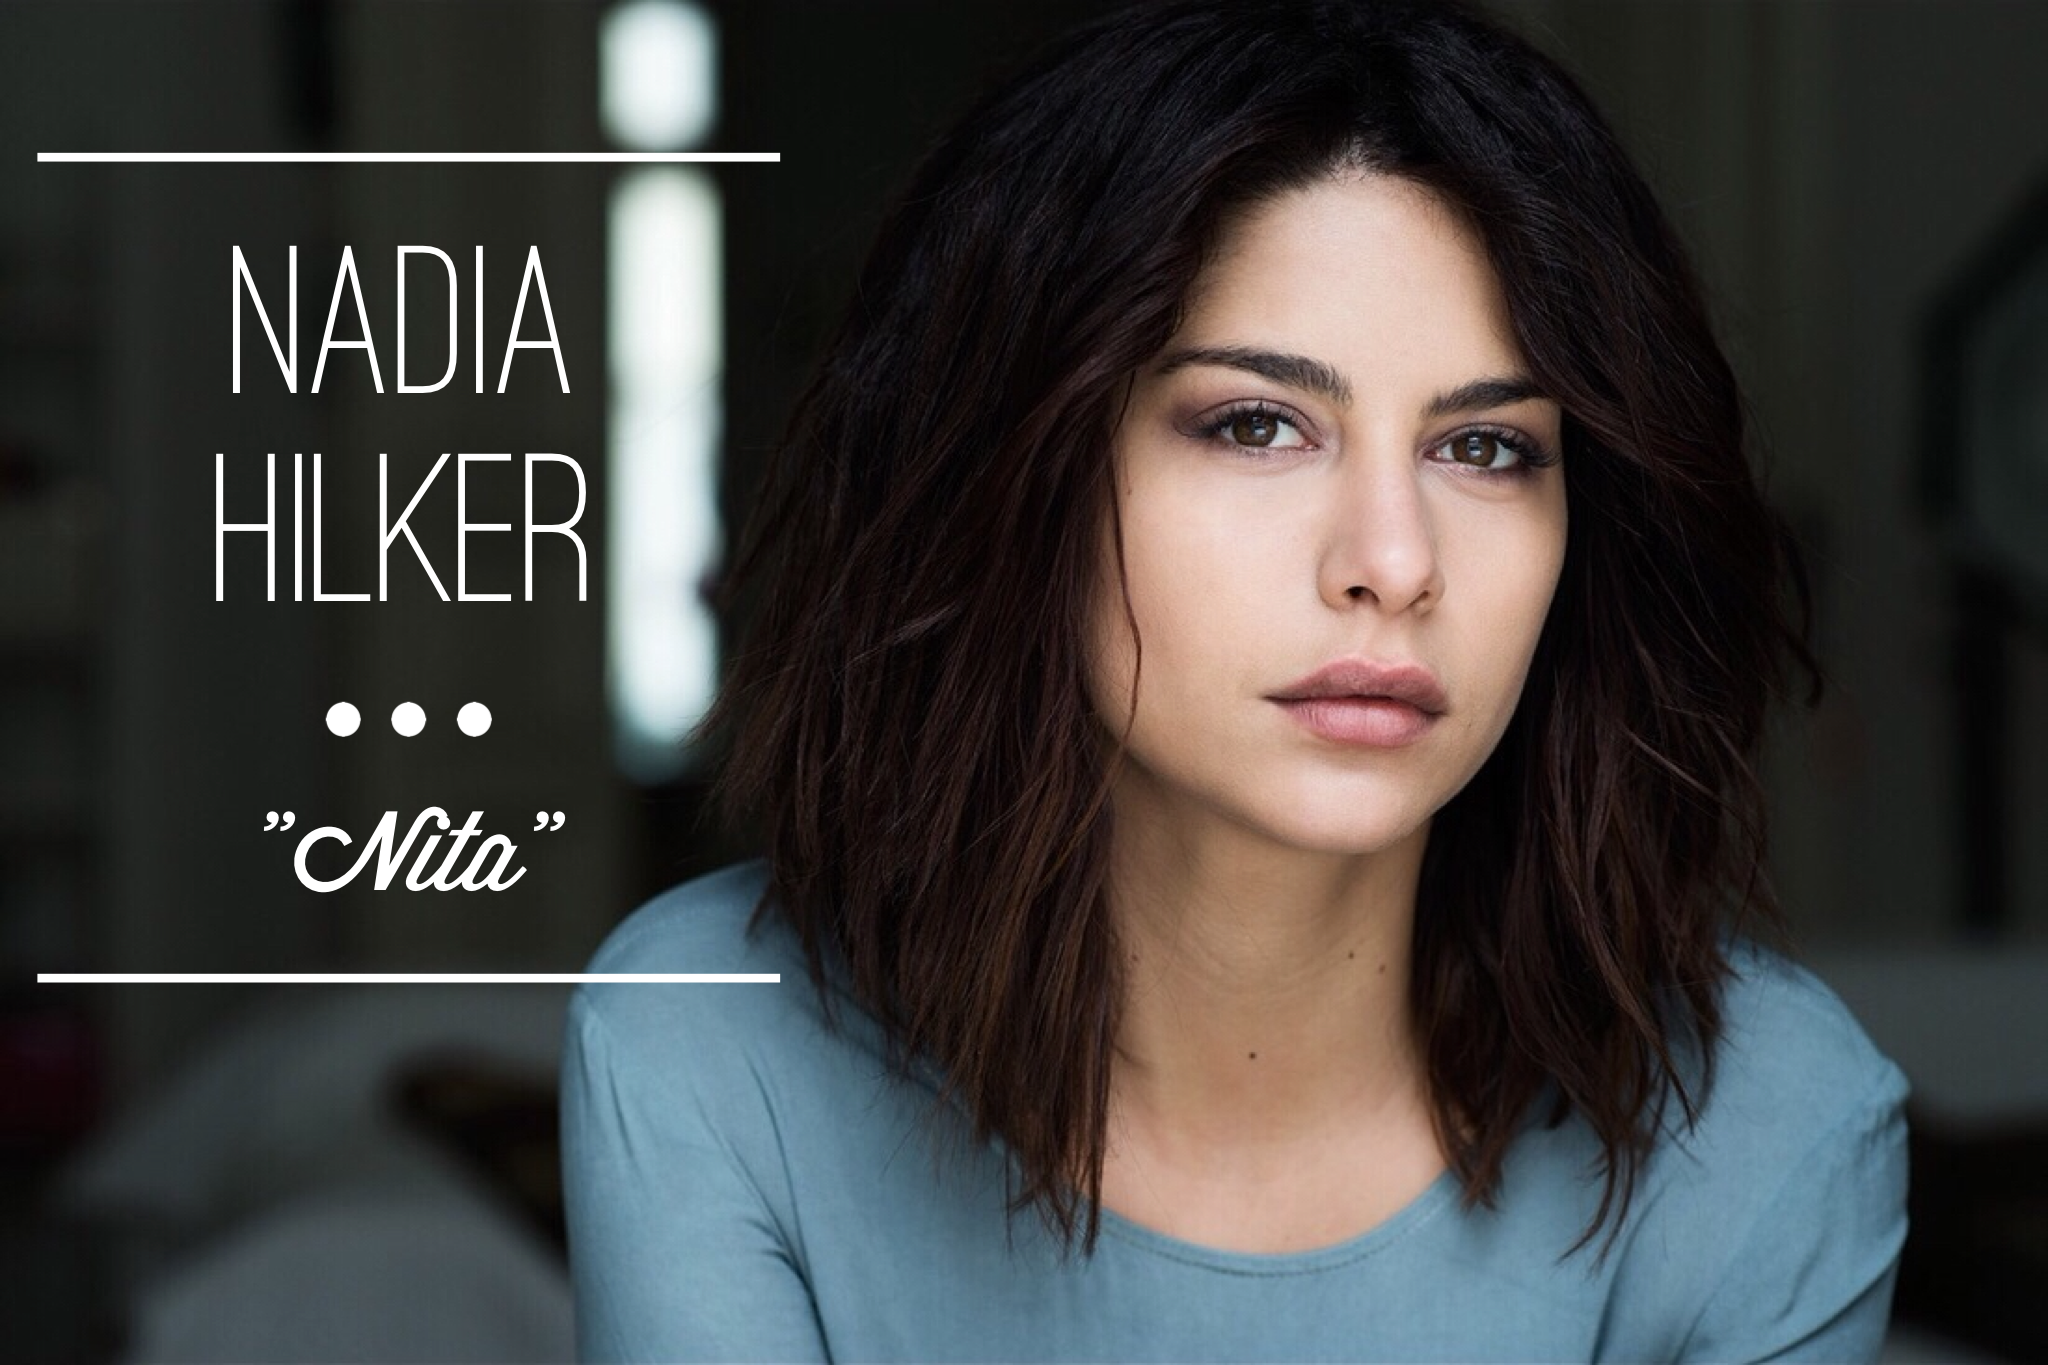 Casting News: Nadia Hilker Cast as “Nita” in Allegiant Part 1